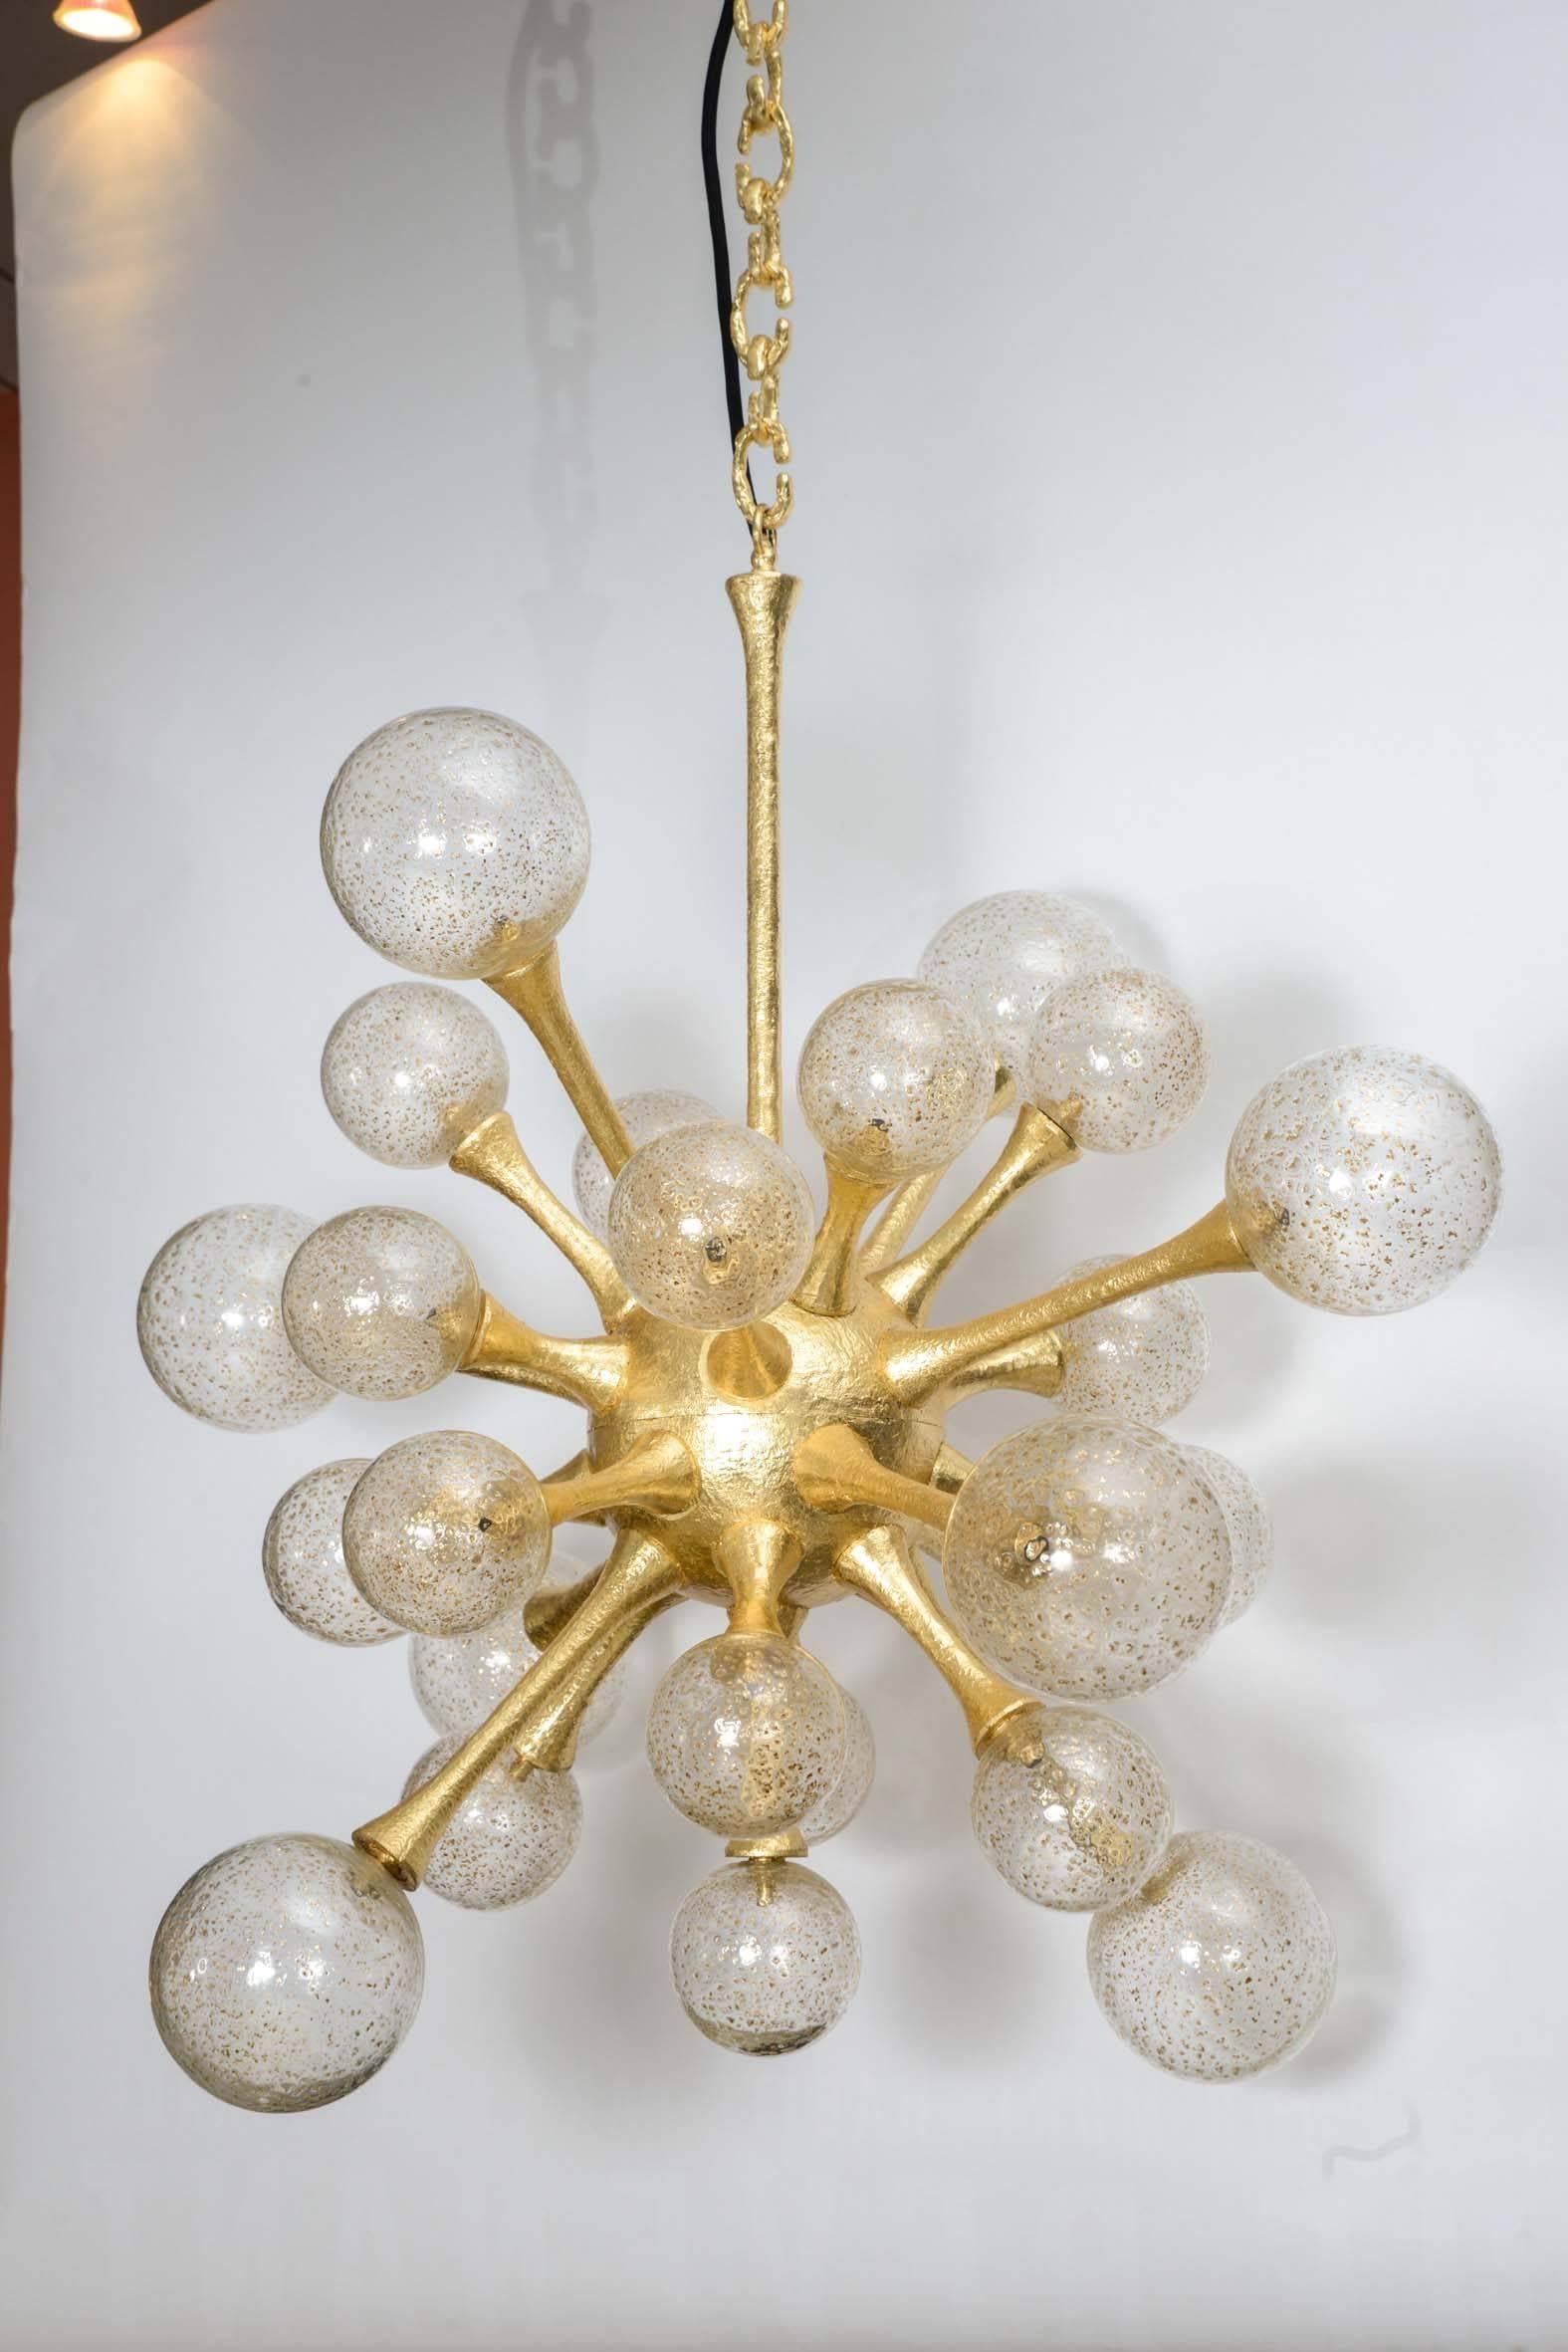 Fantastic "sputnik" chandelier with halogen lights.

High 130 cm with the channel
50 cm without.